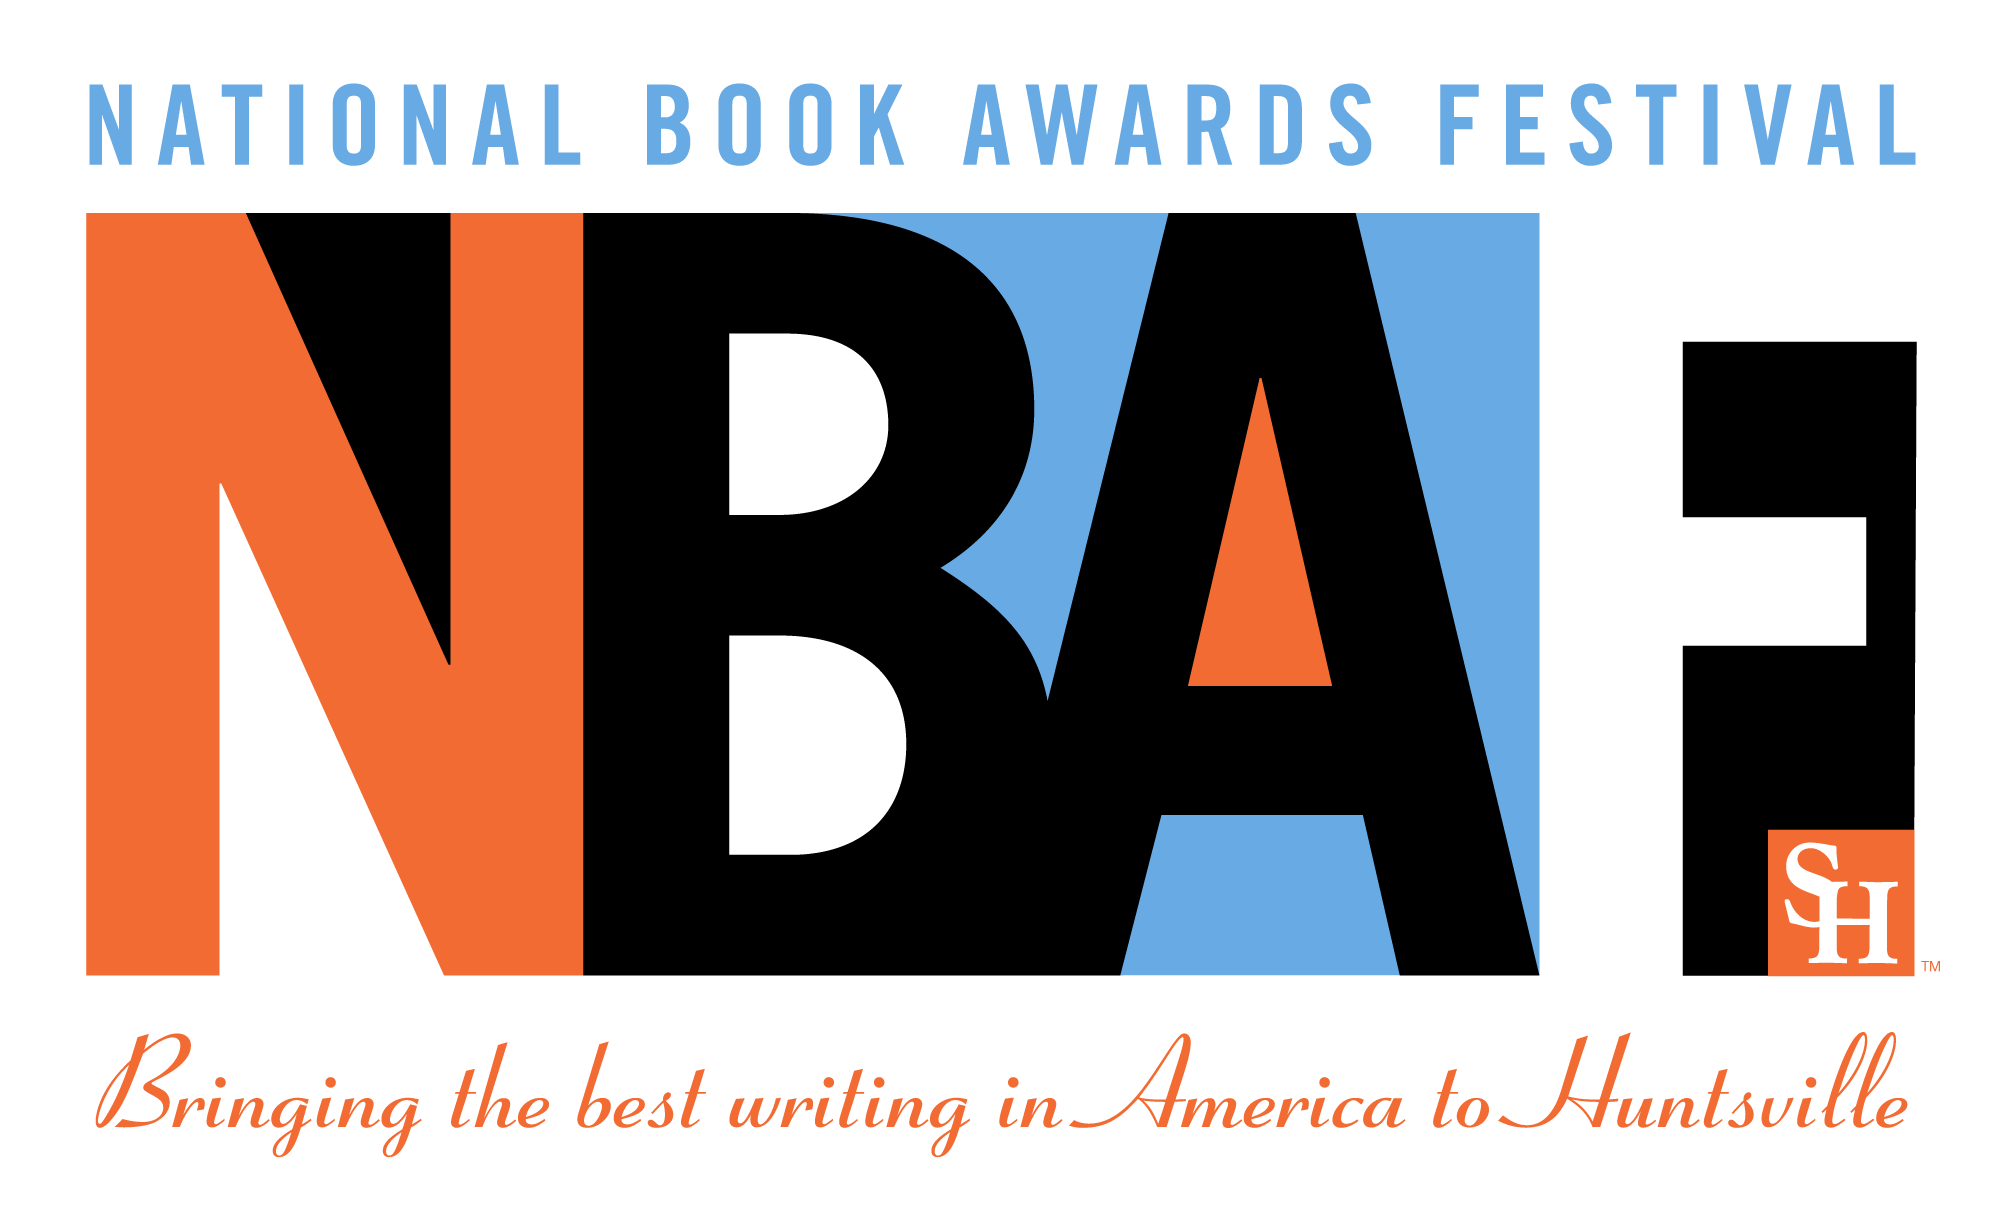 National Book Awards Festival